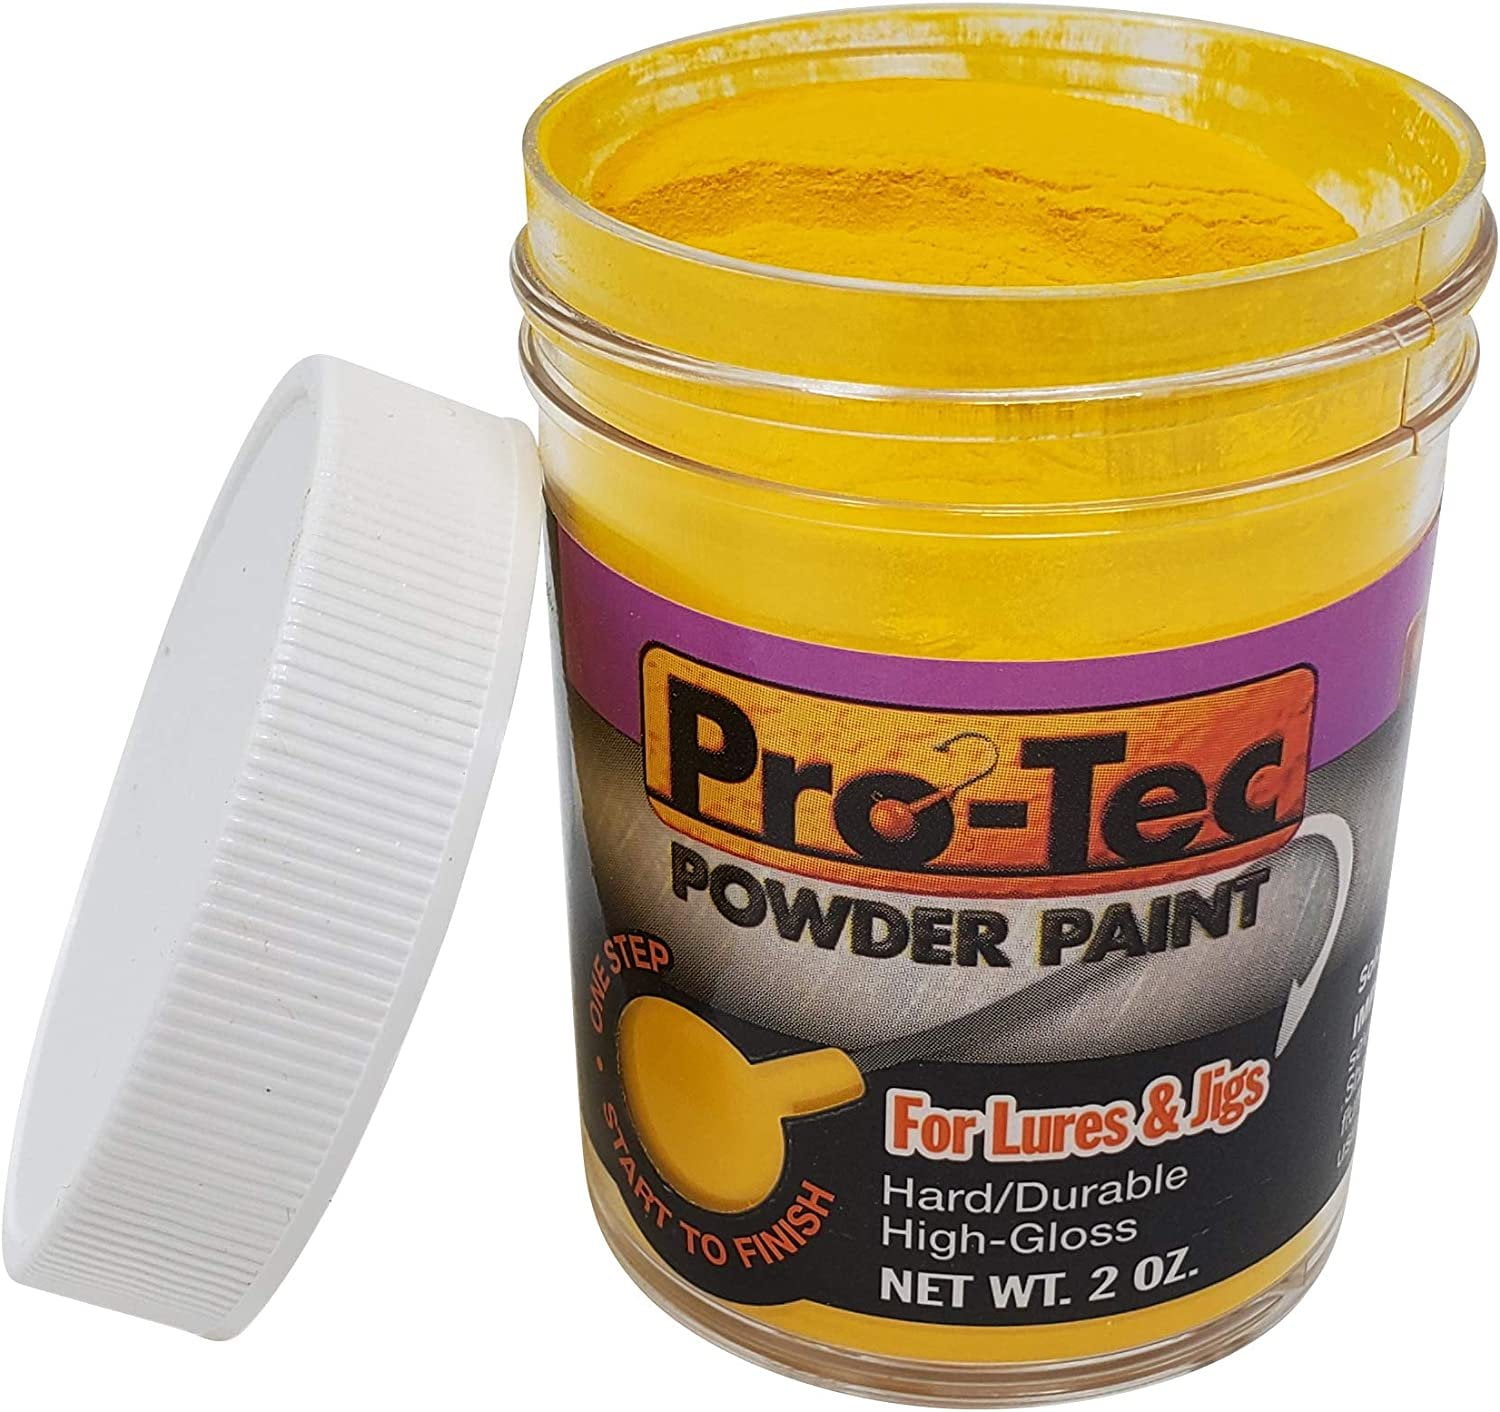 Pro-Tec Powder Paint Standard